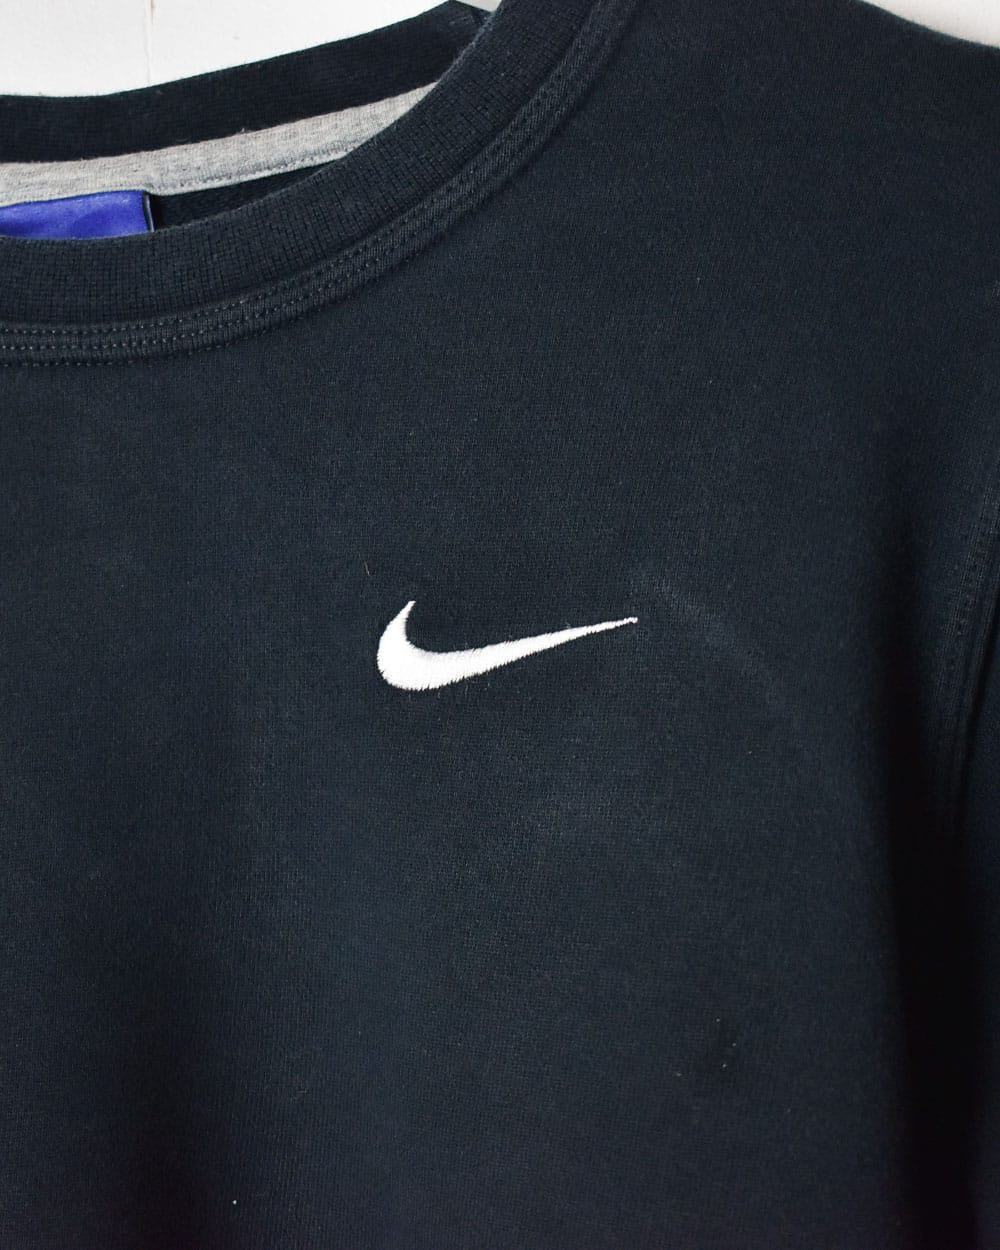 Navy Nike Sweatshirt - X-Small